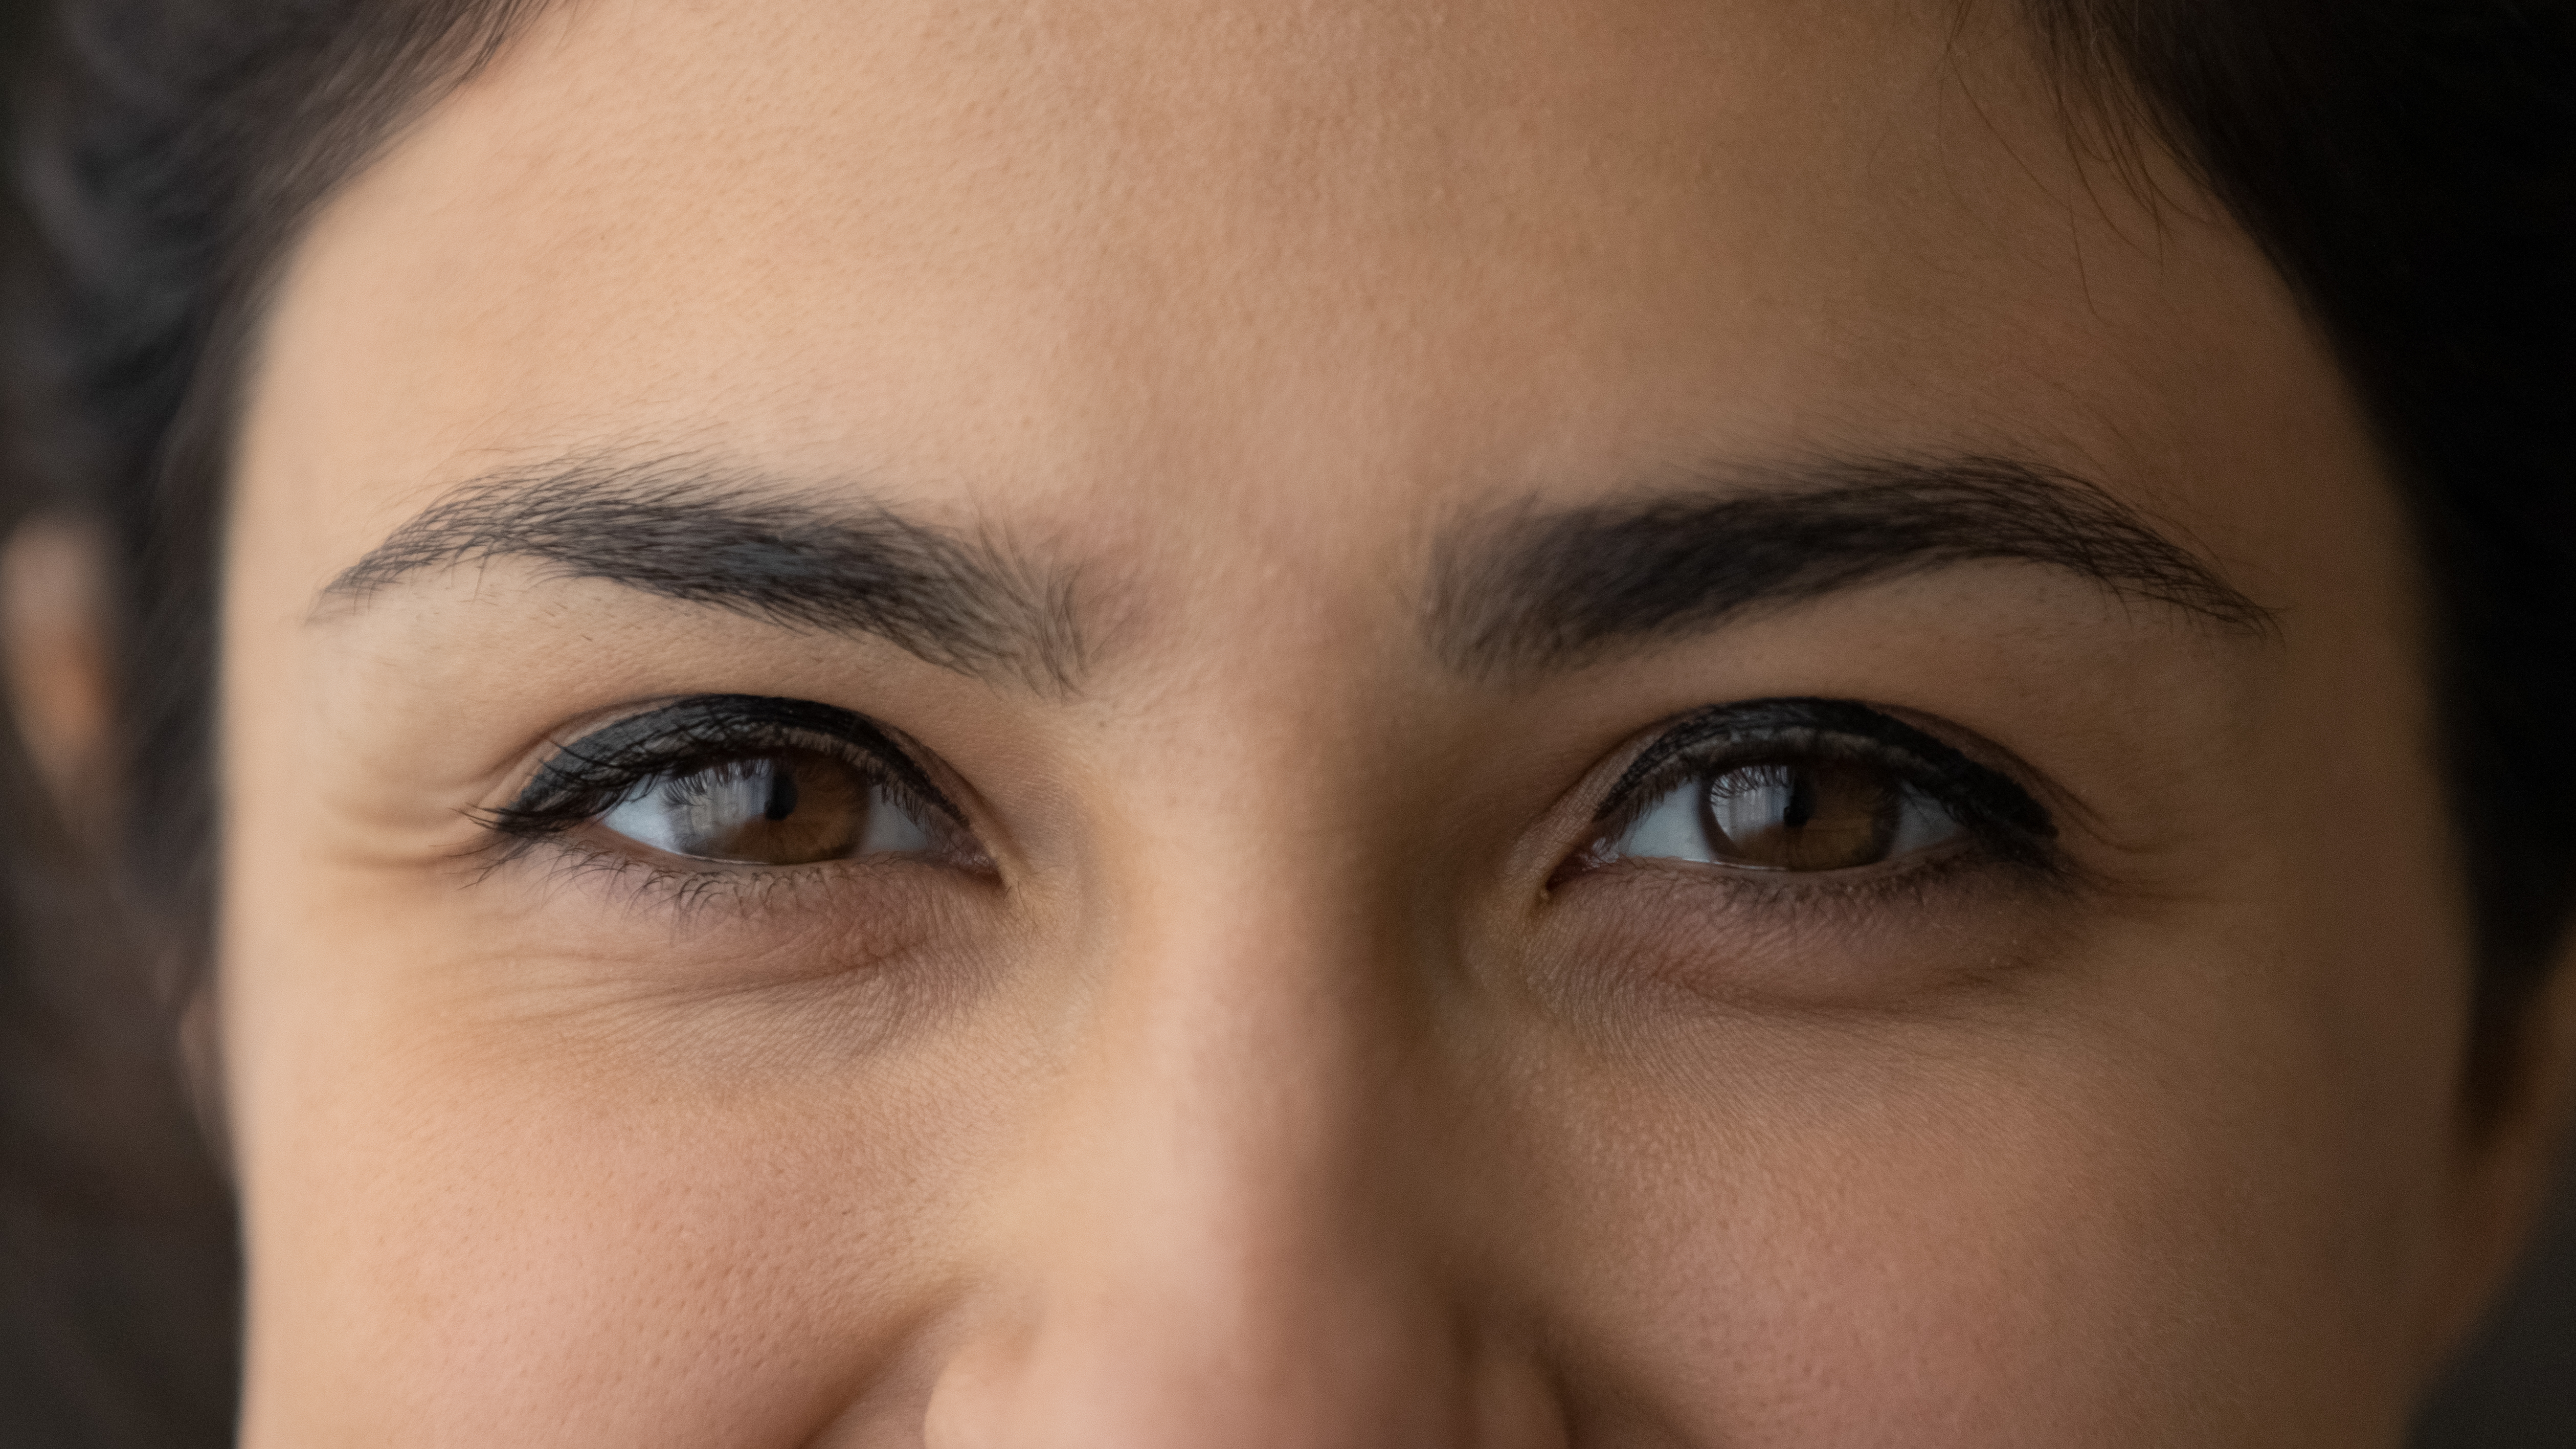 Crop close up of eyes | Source: Shutterstock